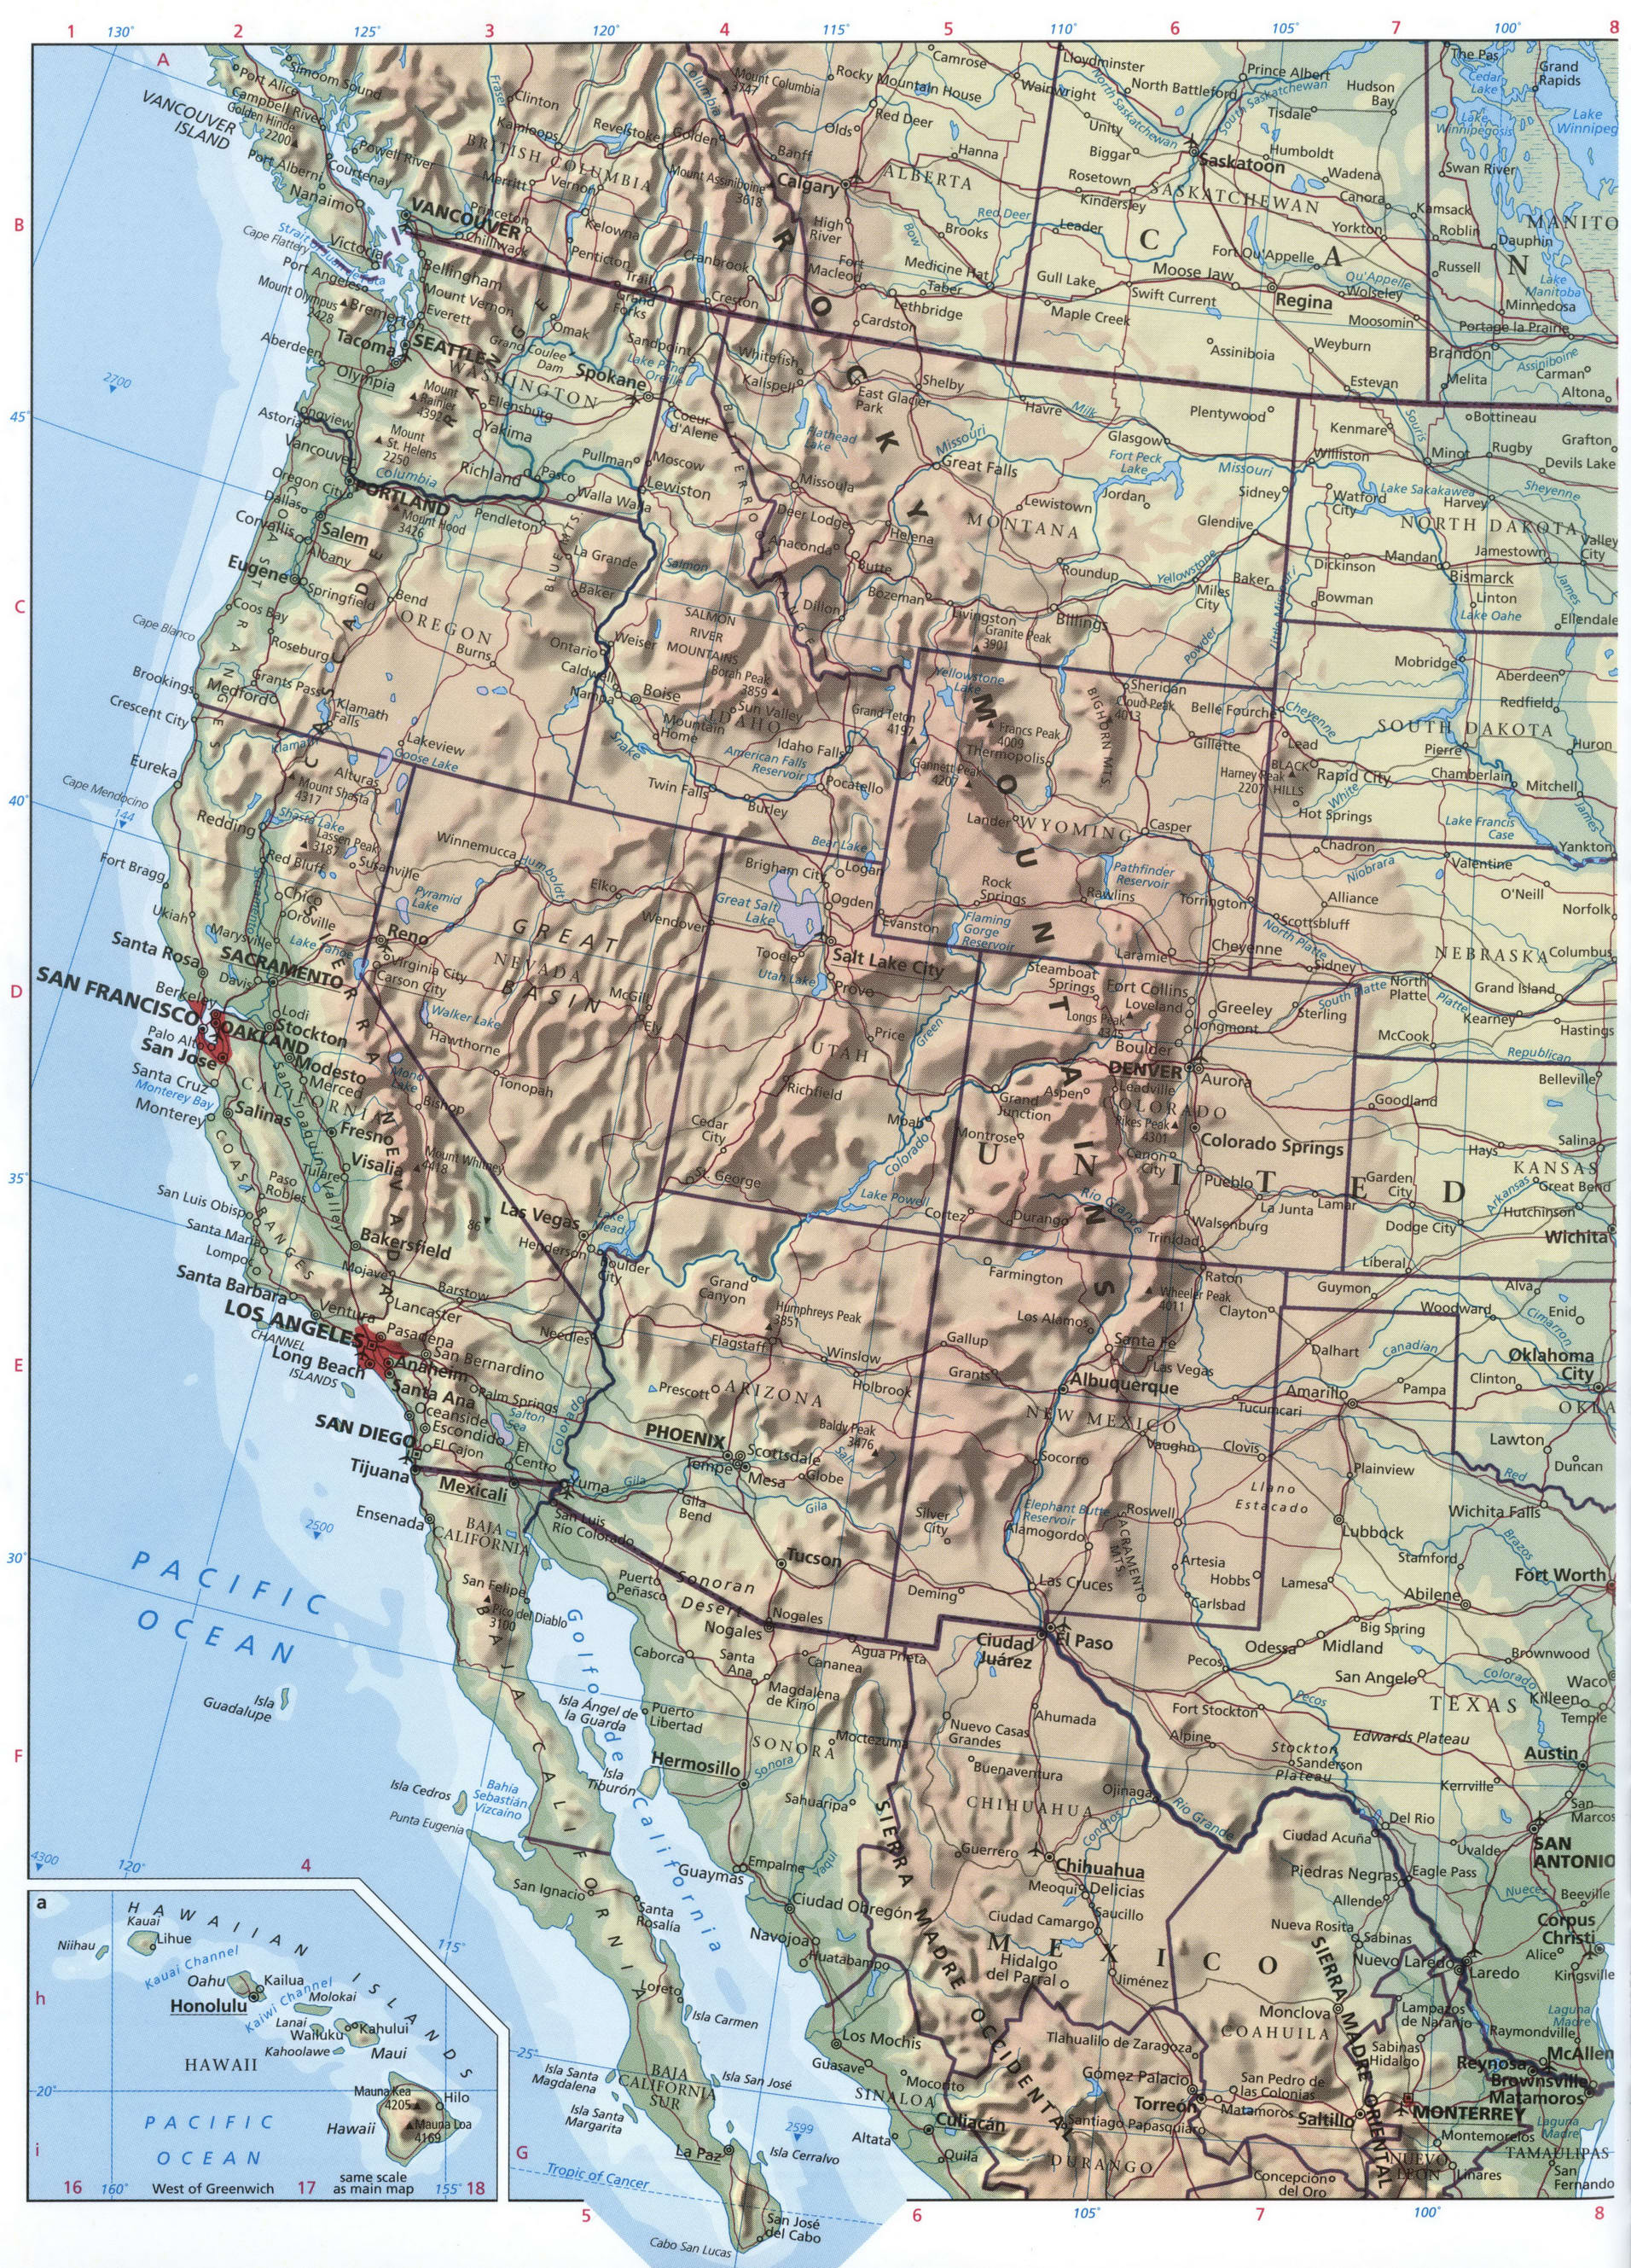 USA western coast map